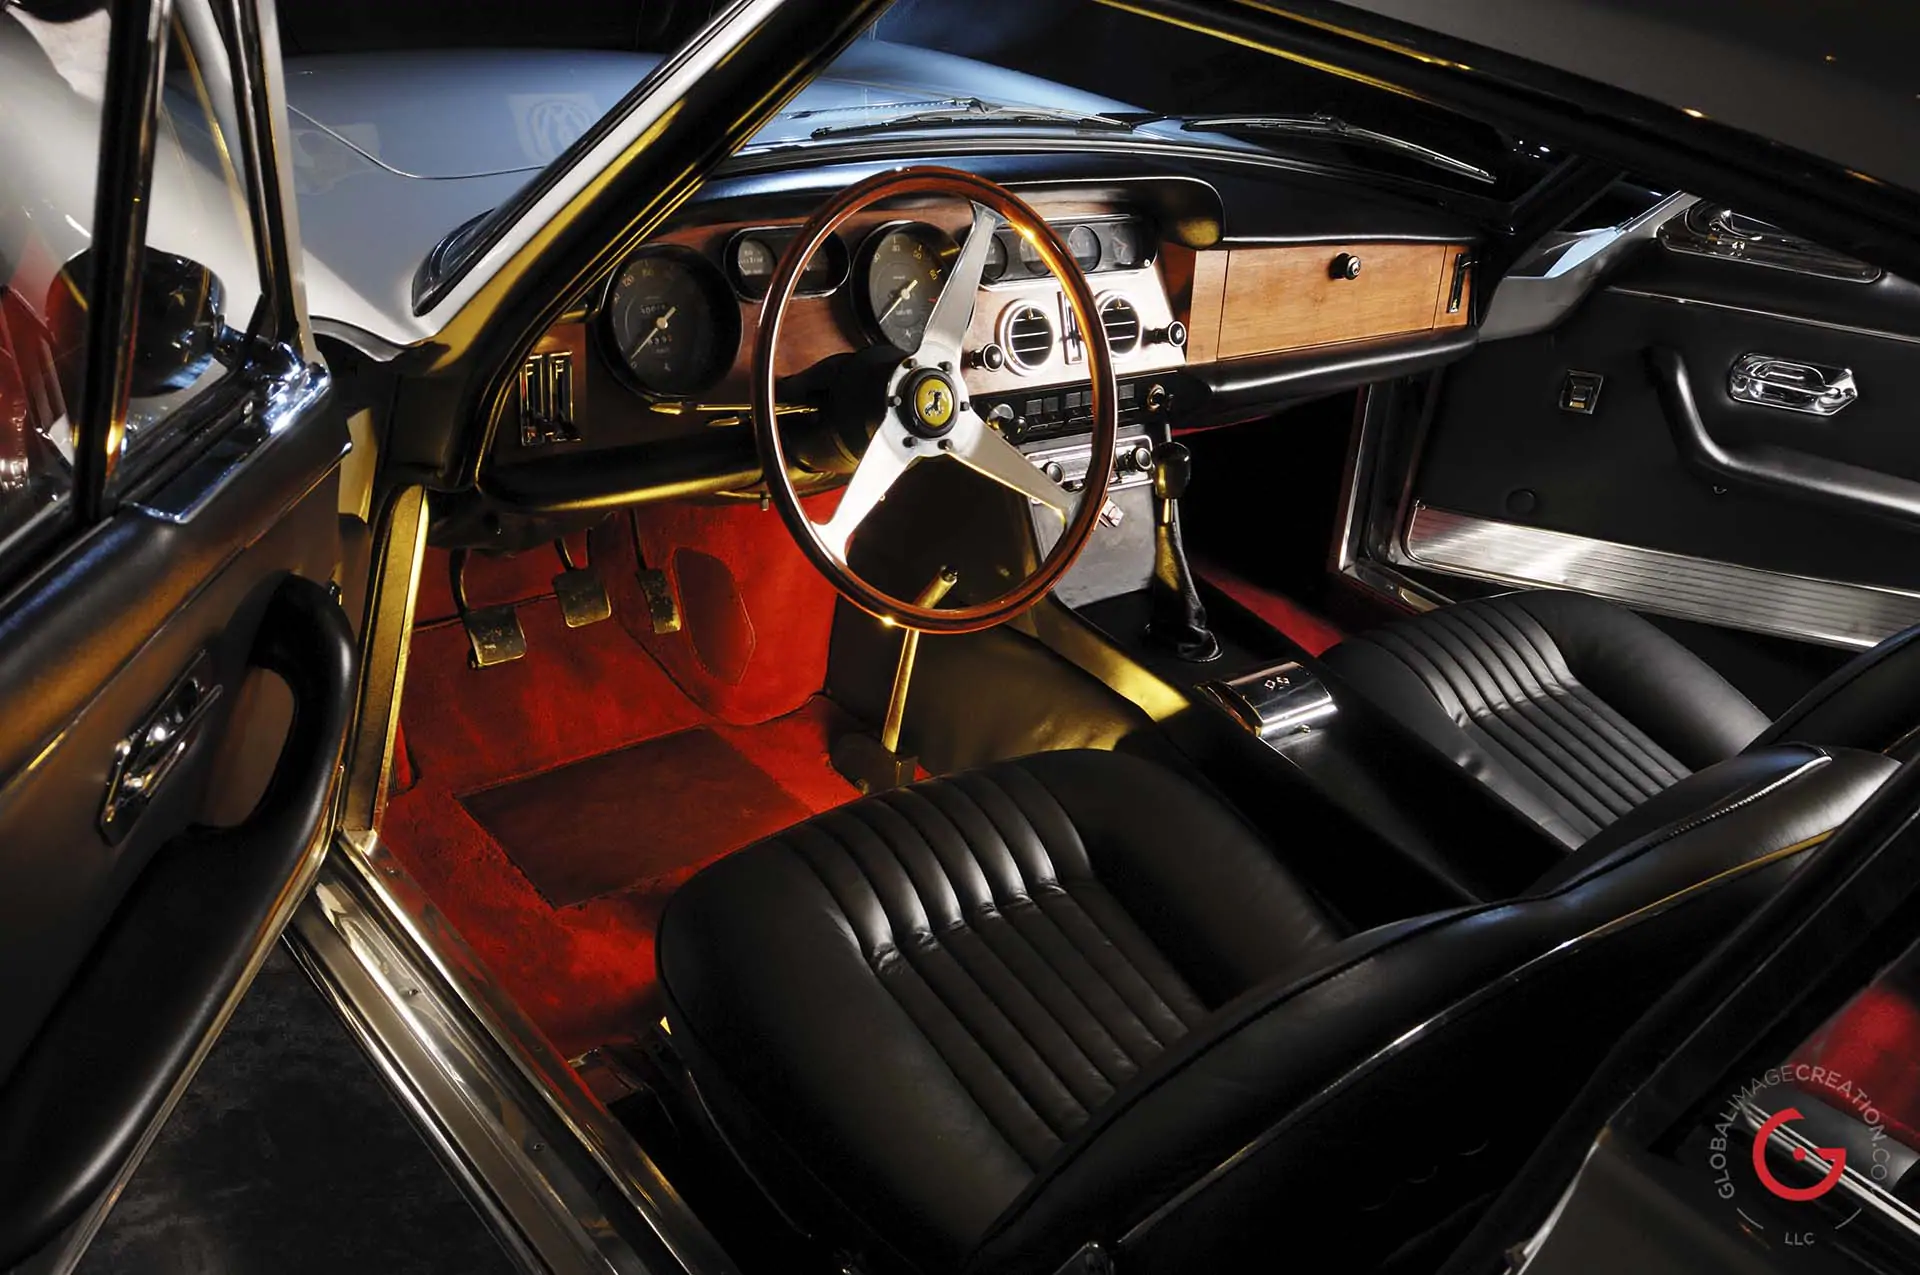 Classic Ferrari Interior View - Professional Car Photographer, Automotive Photography